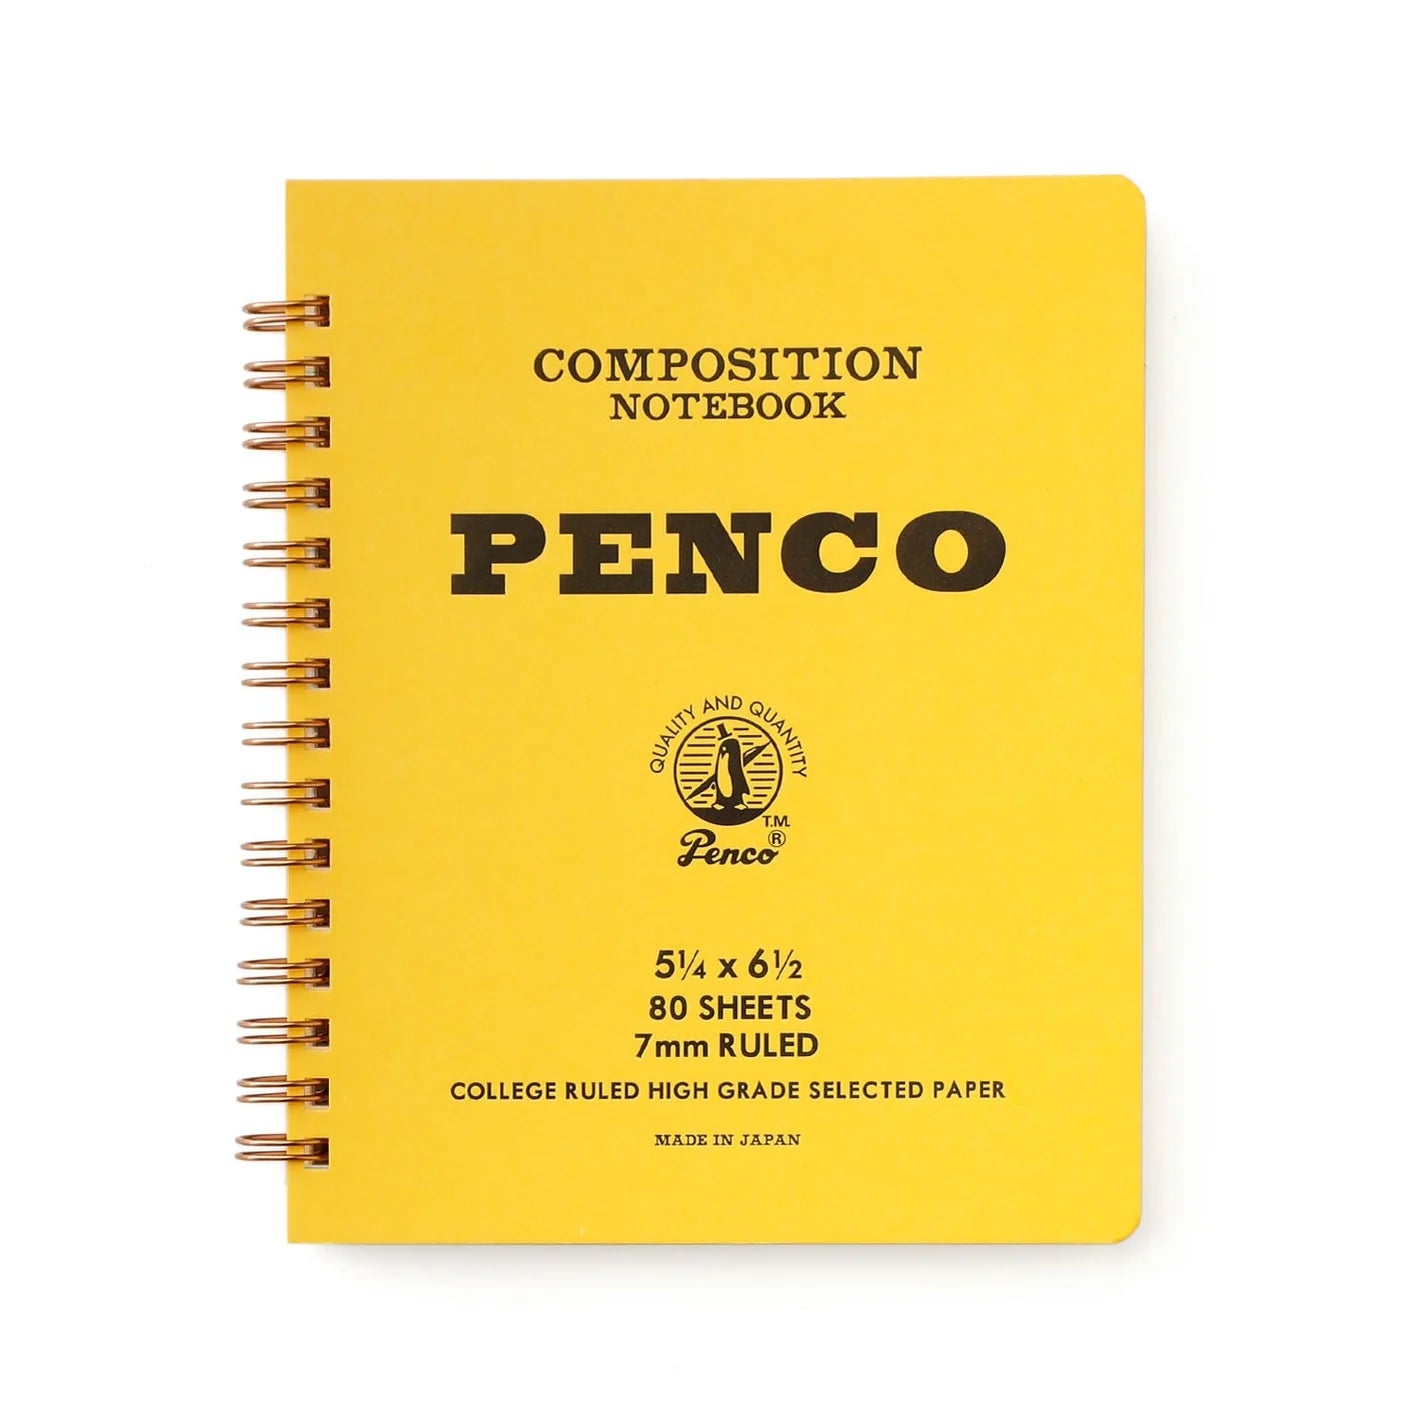 Penco Composition Notebook (Medium)